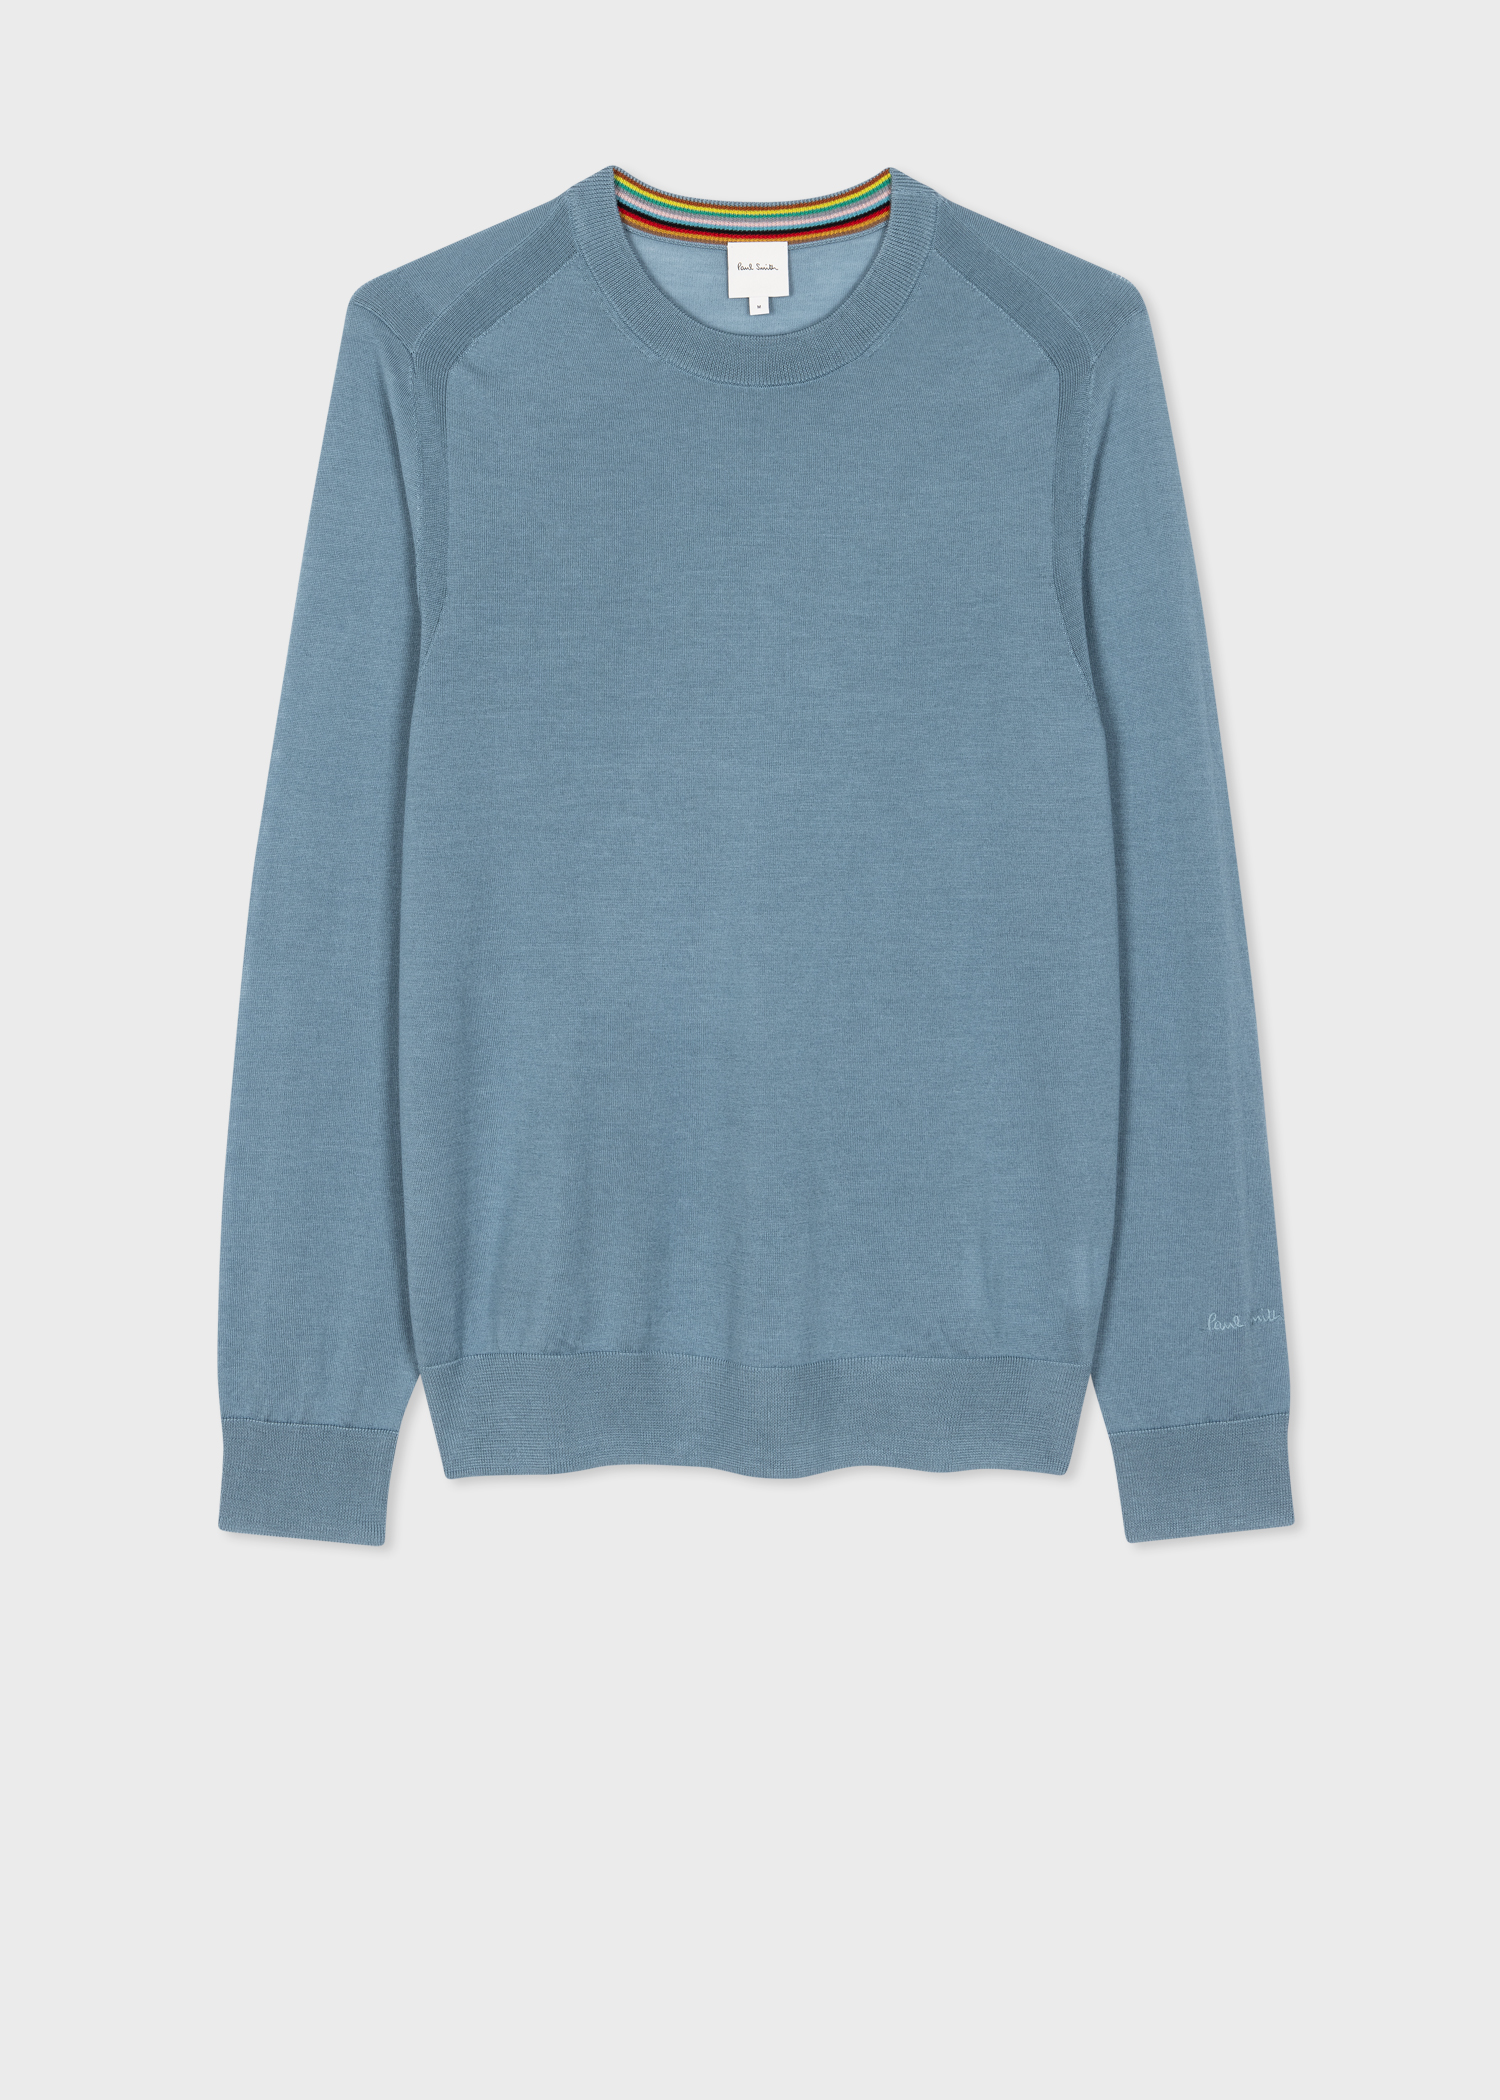 Paul Smith Blue Printed Sweater